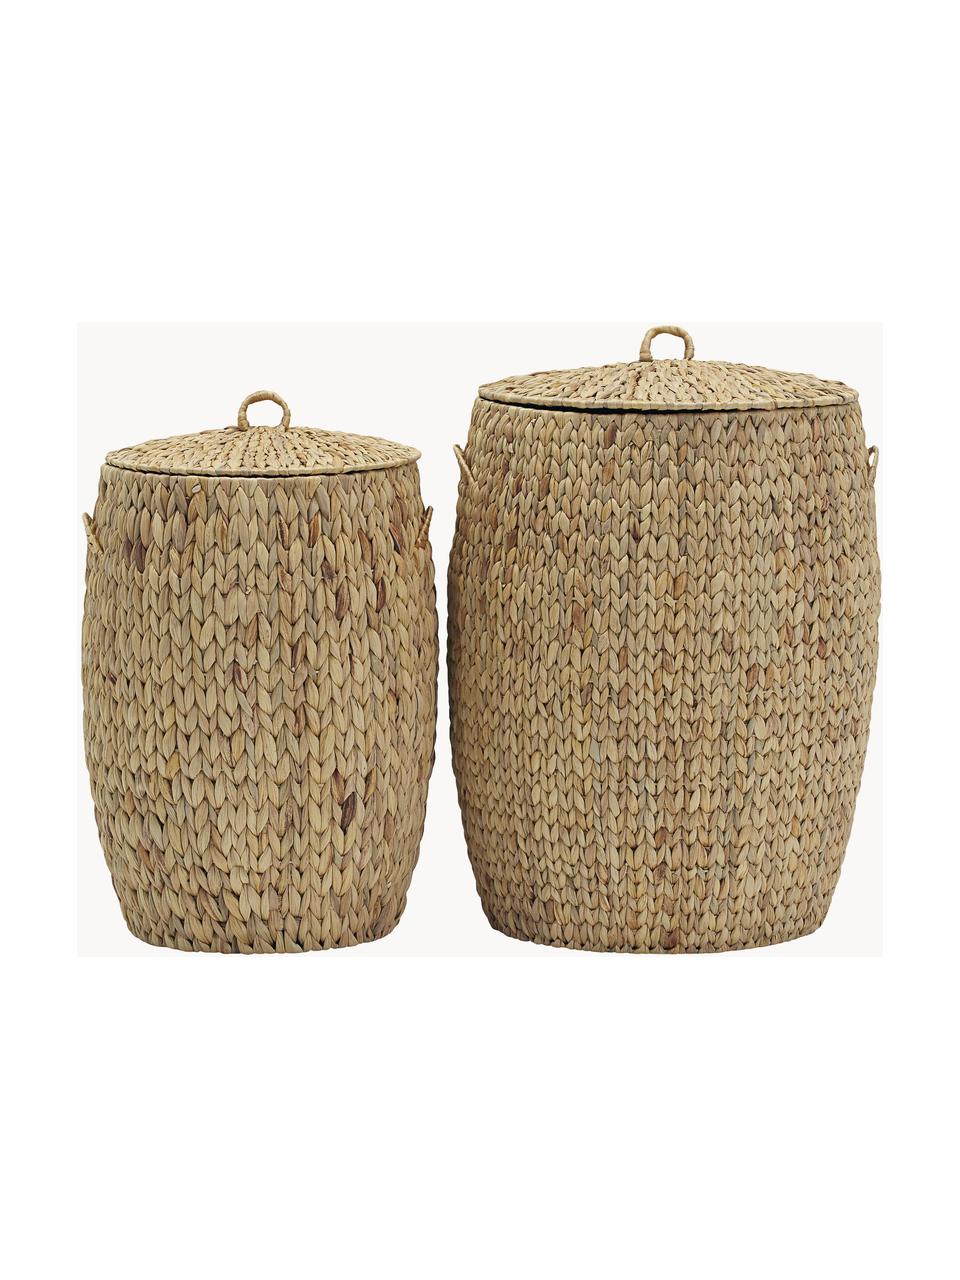 Set de cestas con tapadera Laun, 2 uds., Cesta: jacintos de agua, Estructura: alambre de acero, Beige, Set de diferentes tamaños